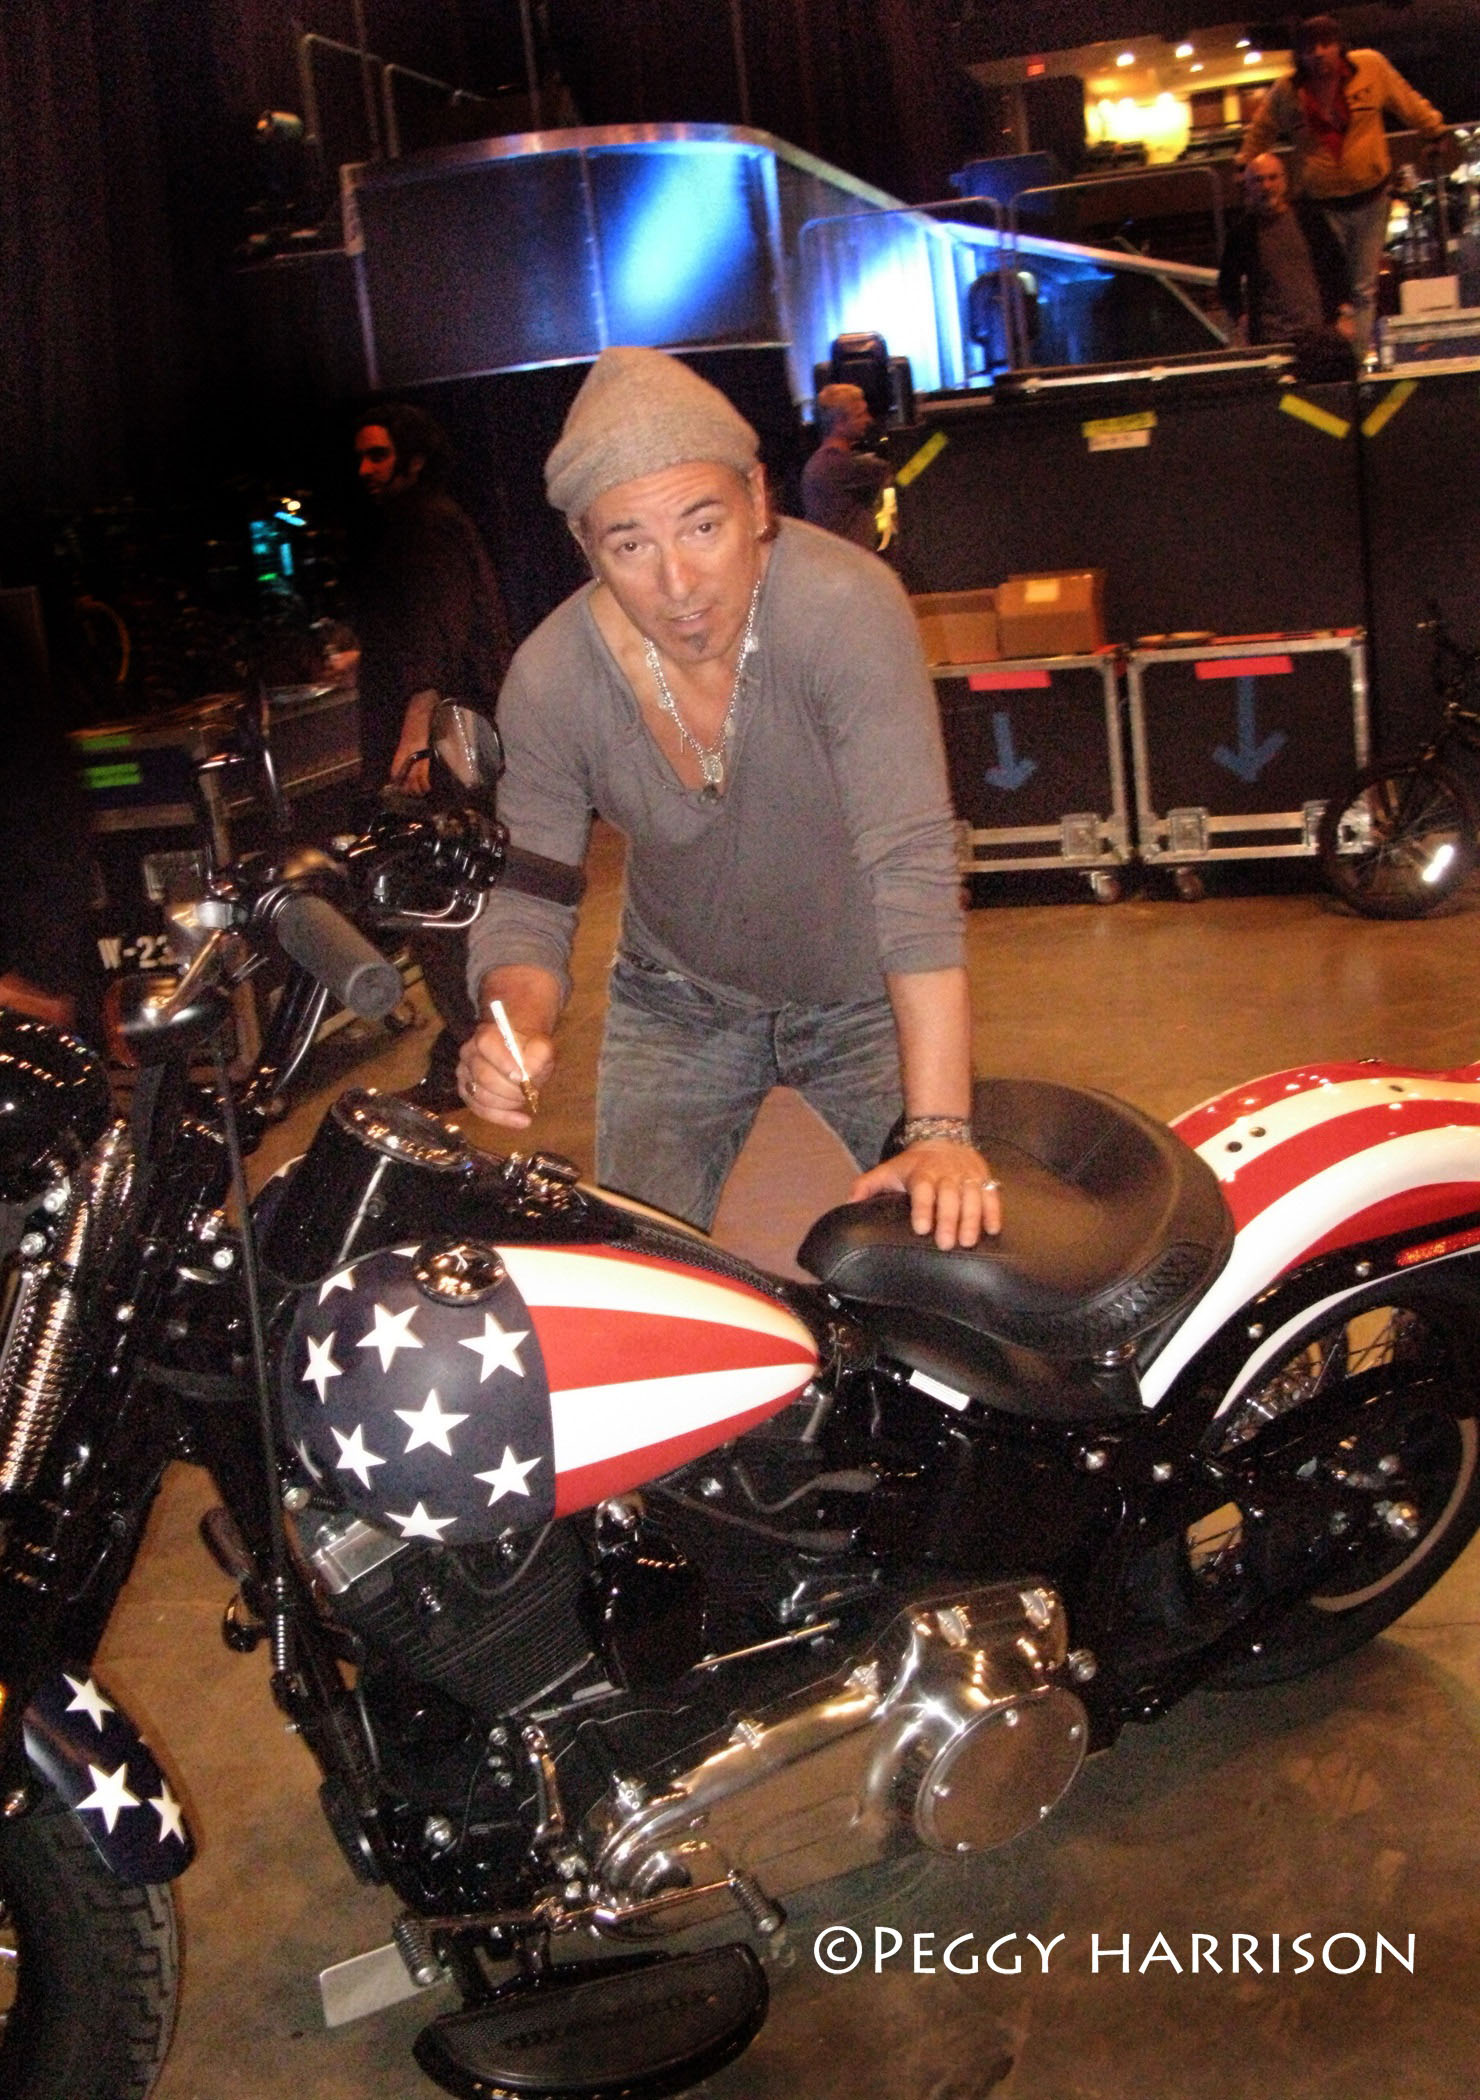 Bruce Springsteen signs the 2008 Harley-Davidson Cross Bones motorcycle